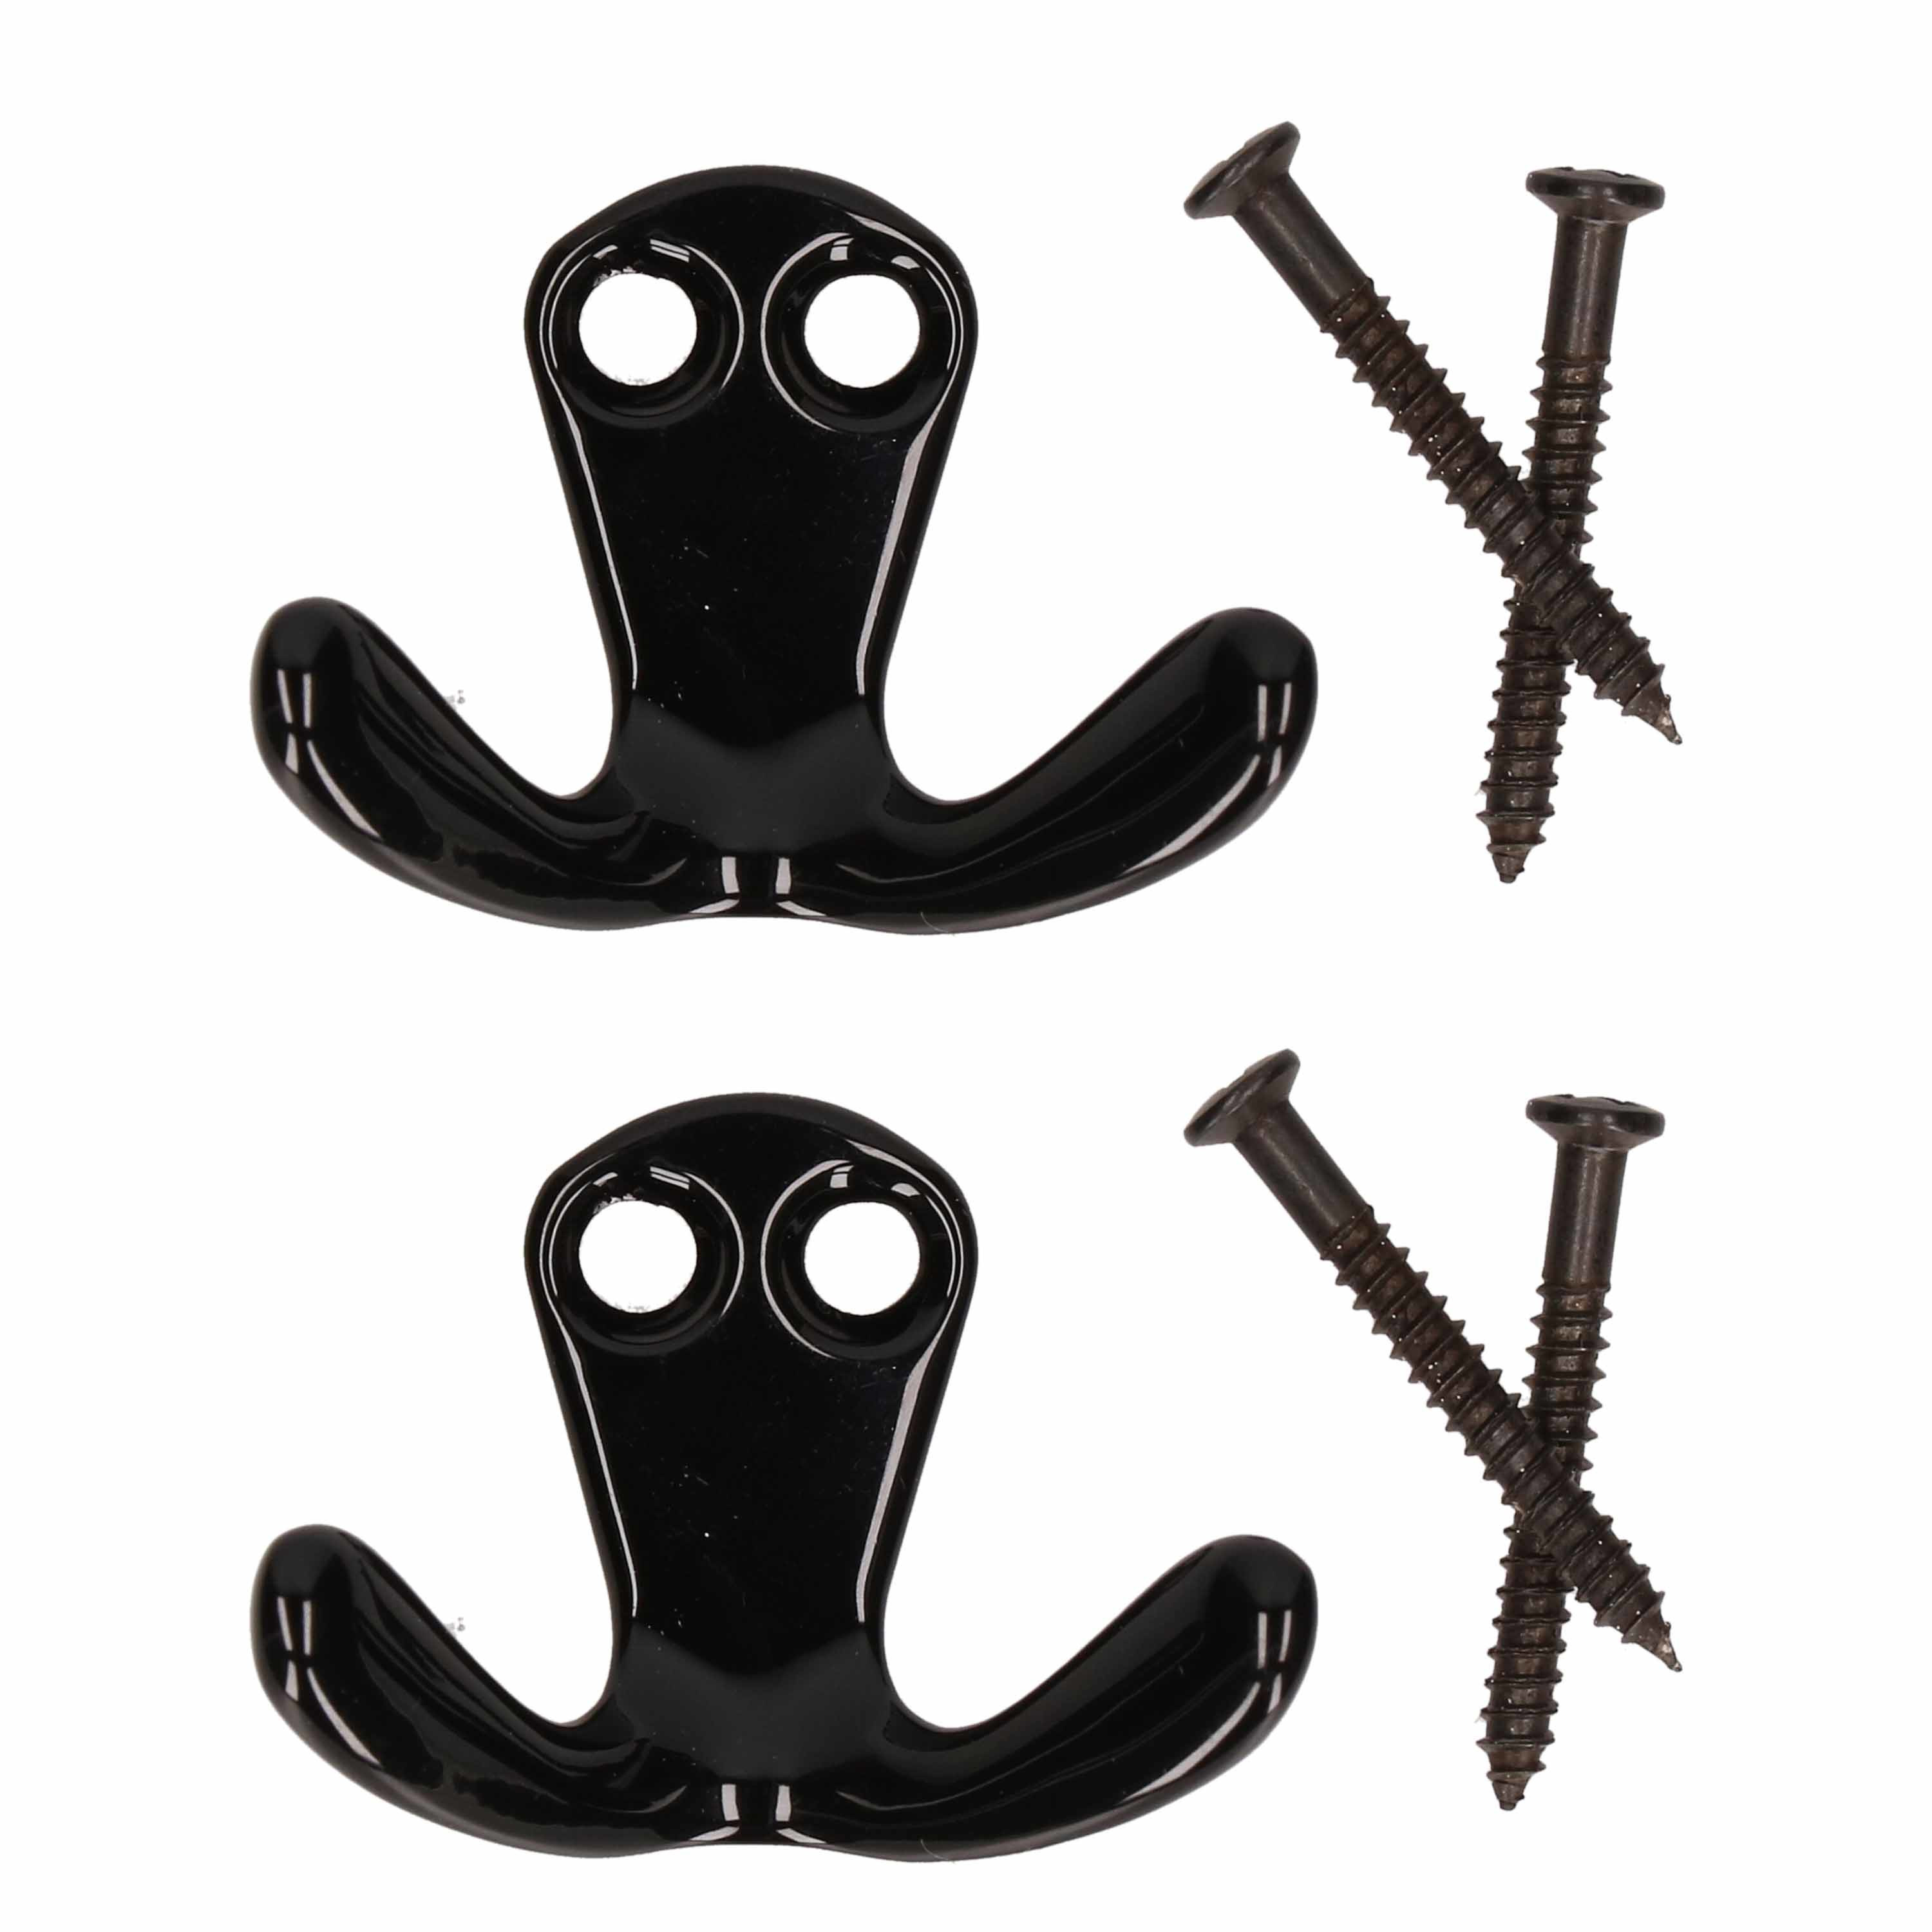 2x Luxe kapstokhaken-jashaken-kapstokhaakjes zwart van hoogwaardig metaal 2,2 x 3,3 cm